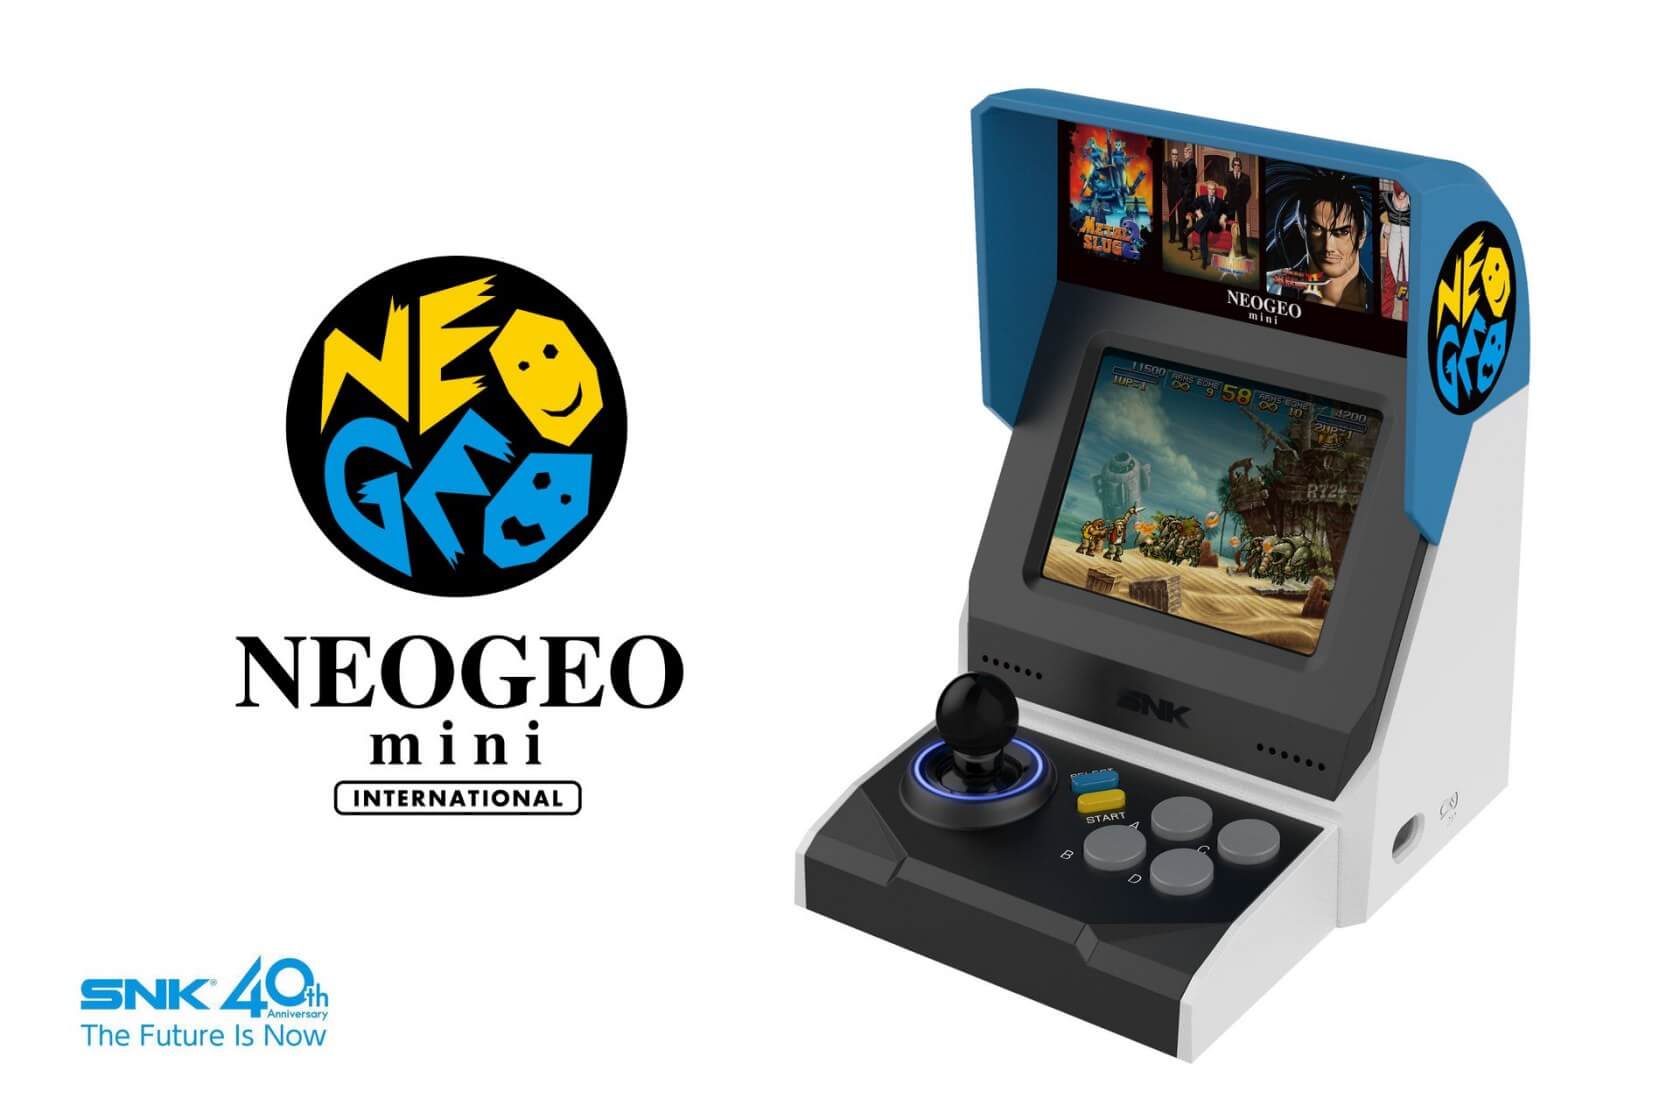 SNK joins retro revolution with the Neo Geo mini